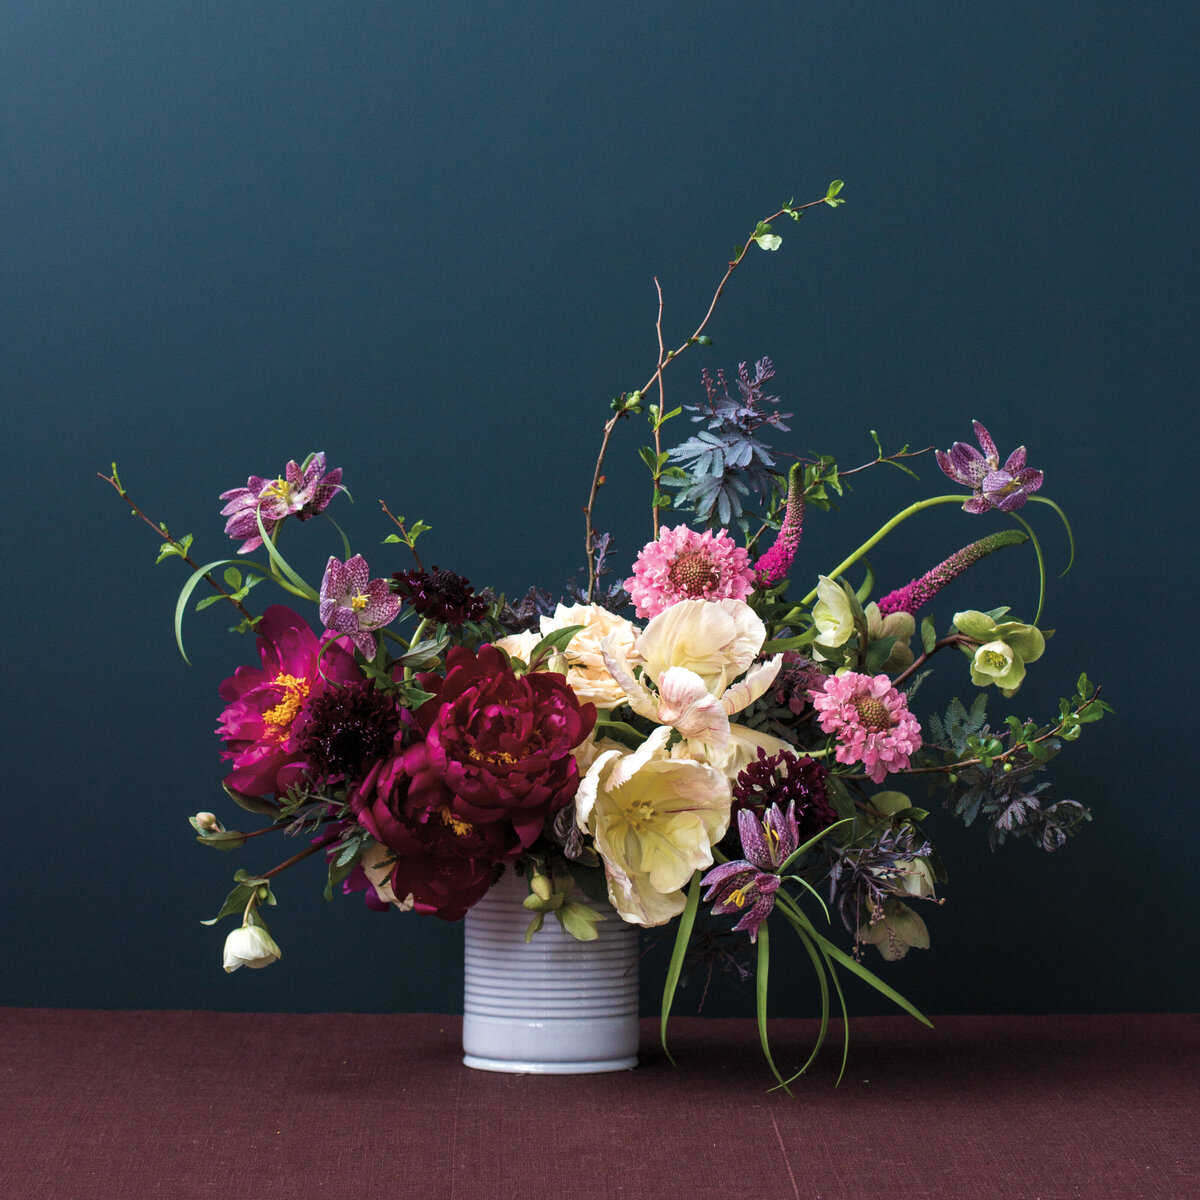 Atelier-Carmel-Wedding-Florist-GALLERY-Arrangements-8